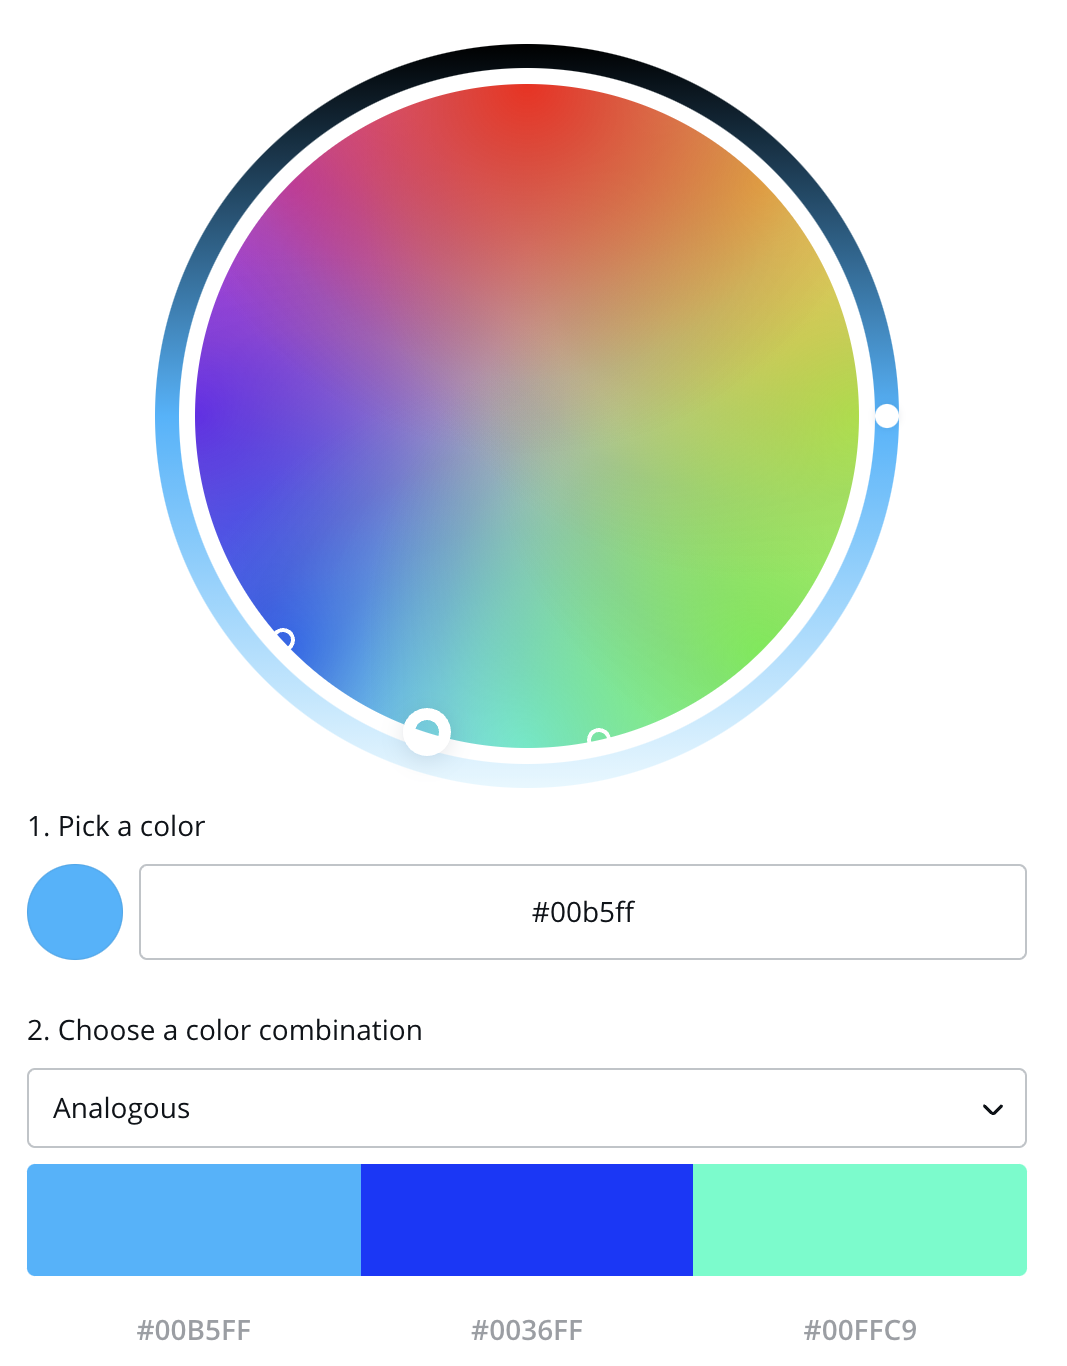 A color wheel showing an example of an analogous color scheme